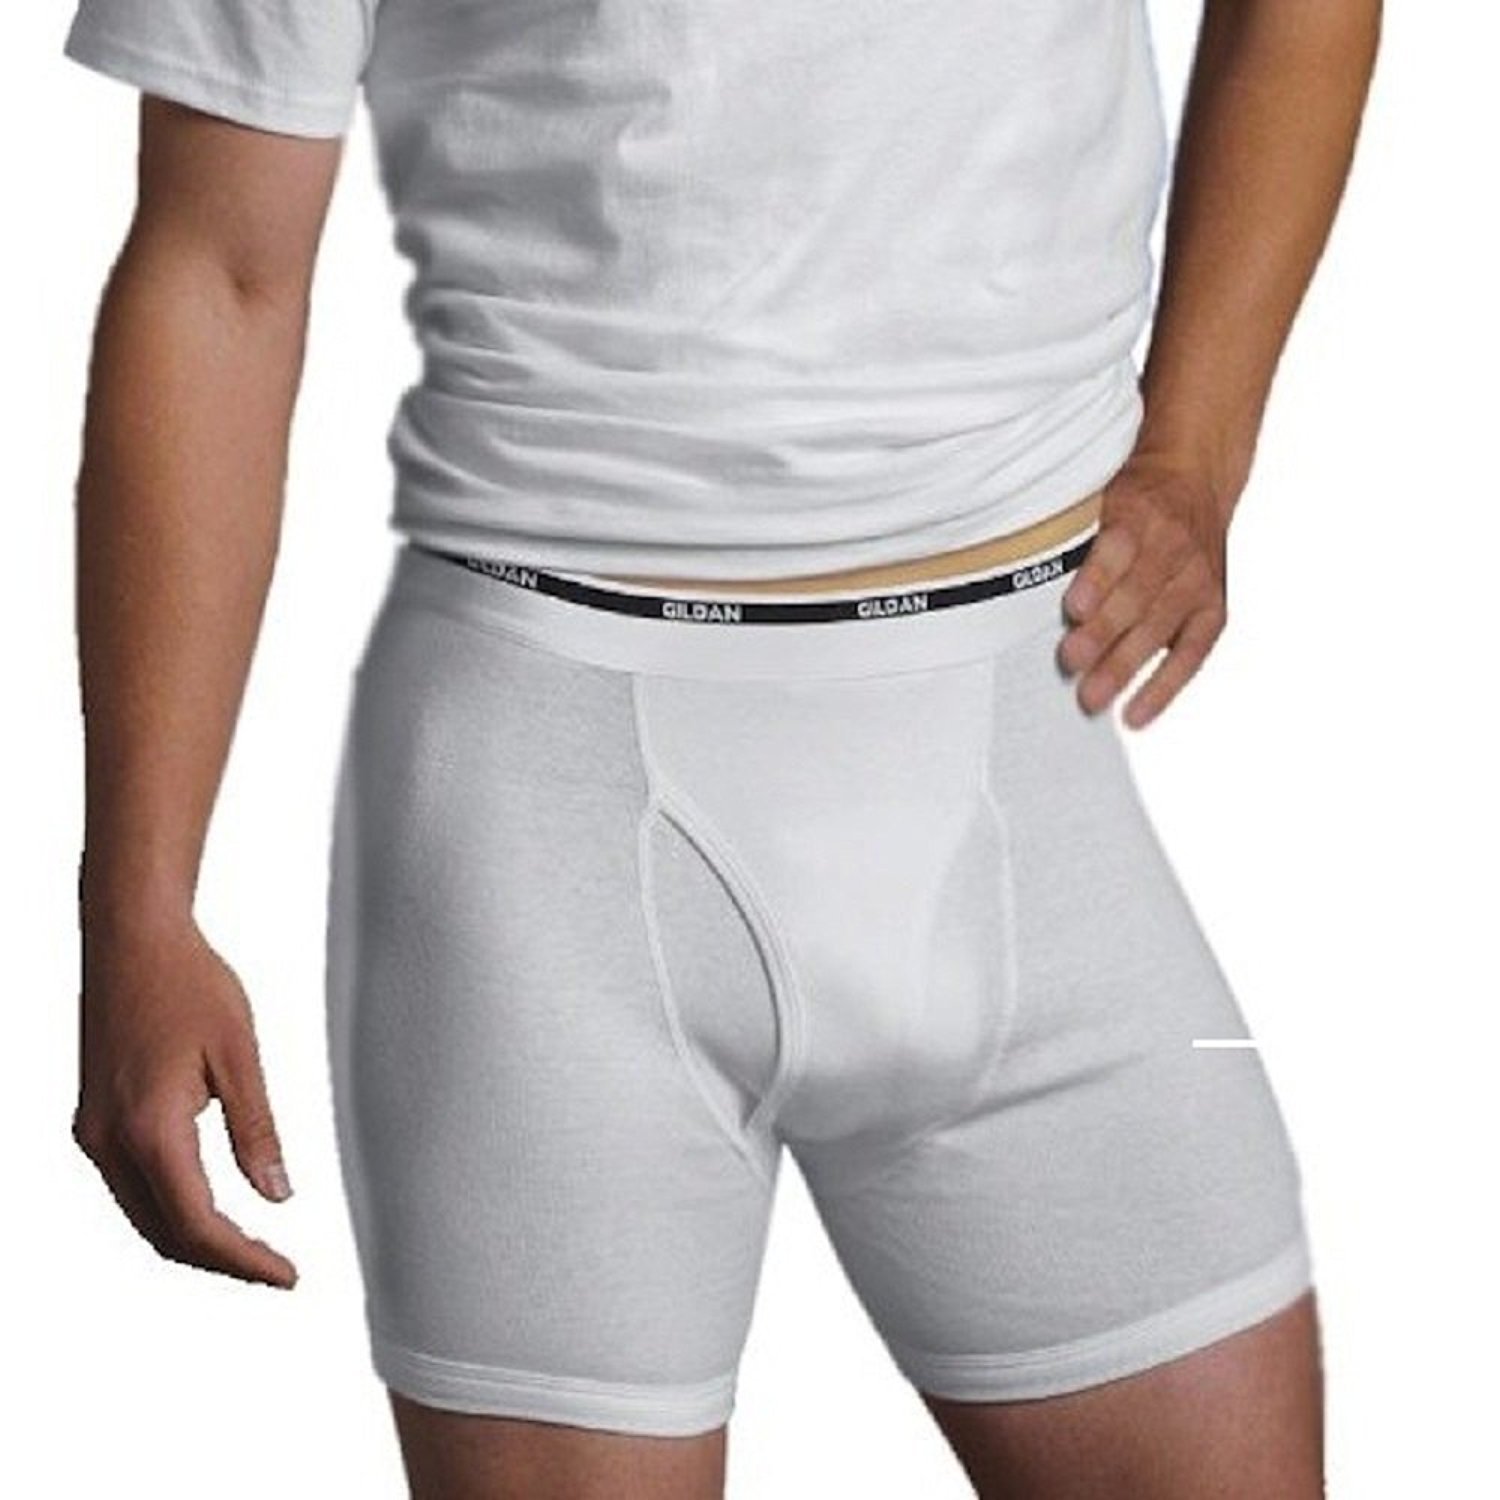 Gildan Men S Boxer Briefs Premium Cotton Underwear 8 Pack White Or Colors Ebay